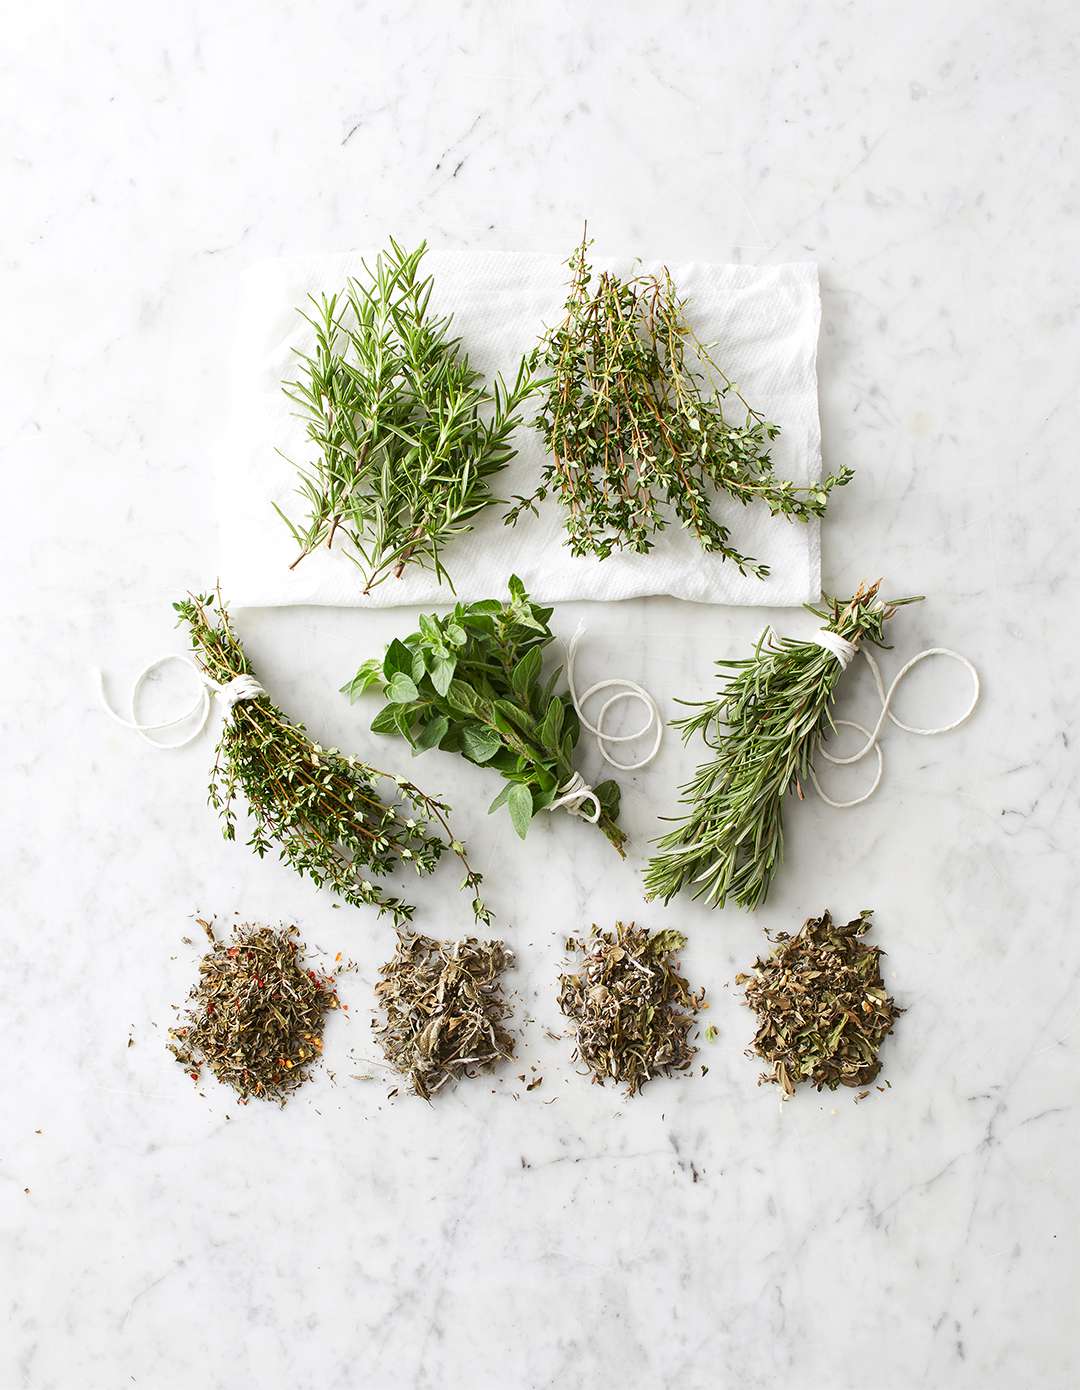 Drying fresh herbs to make dried herbs